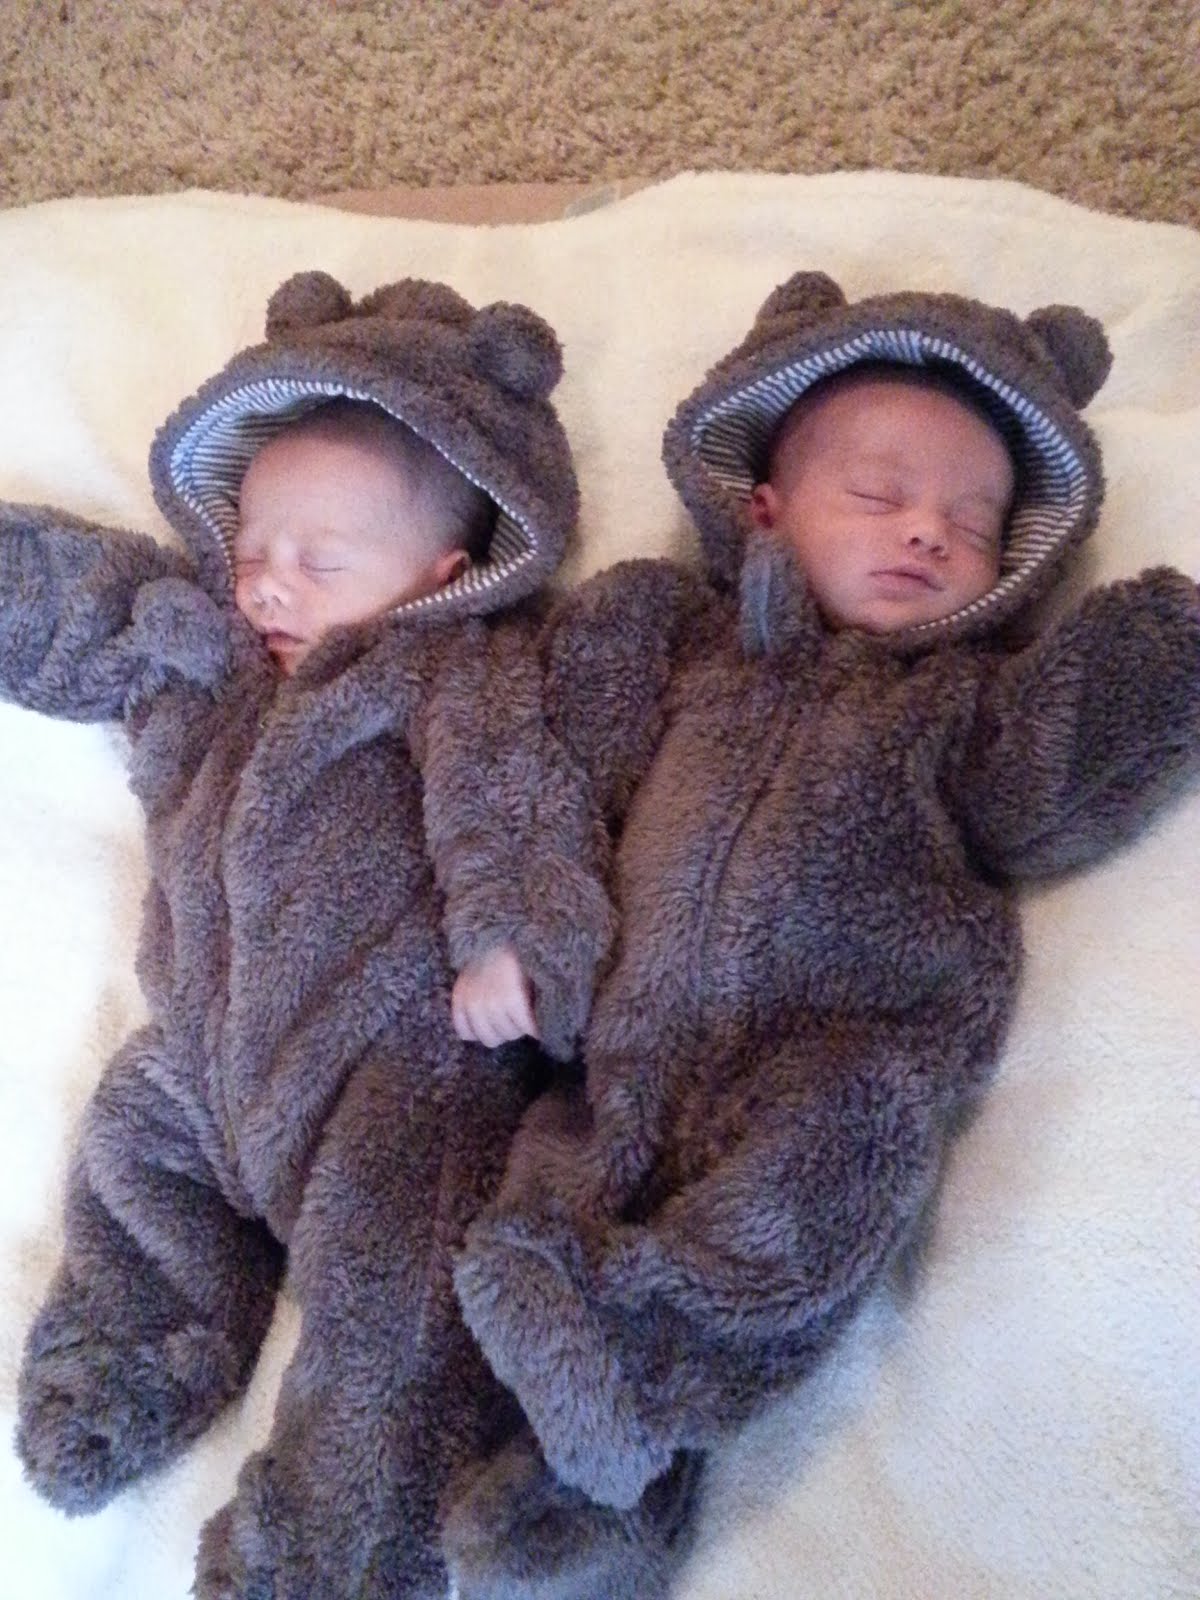 Little bears